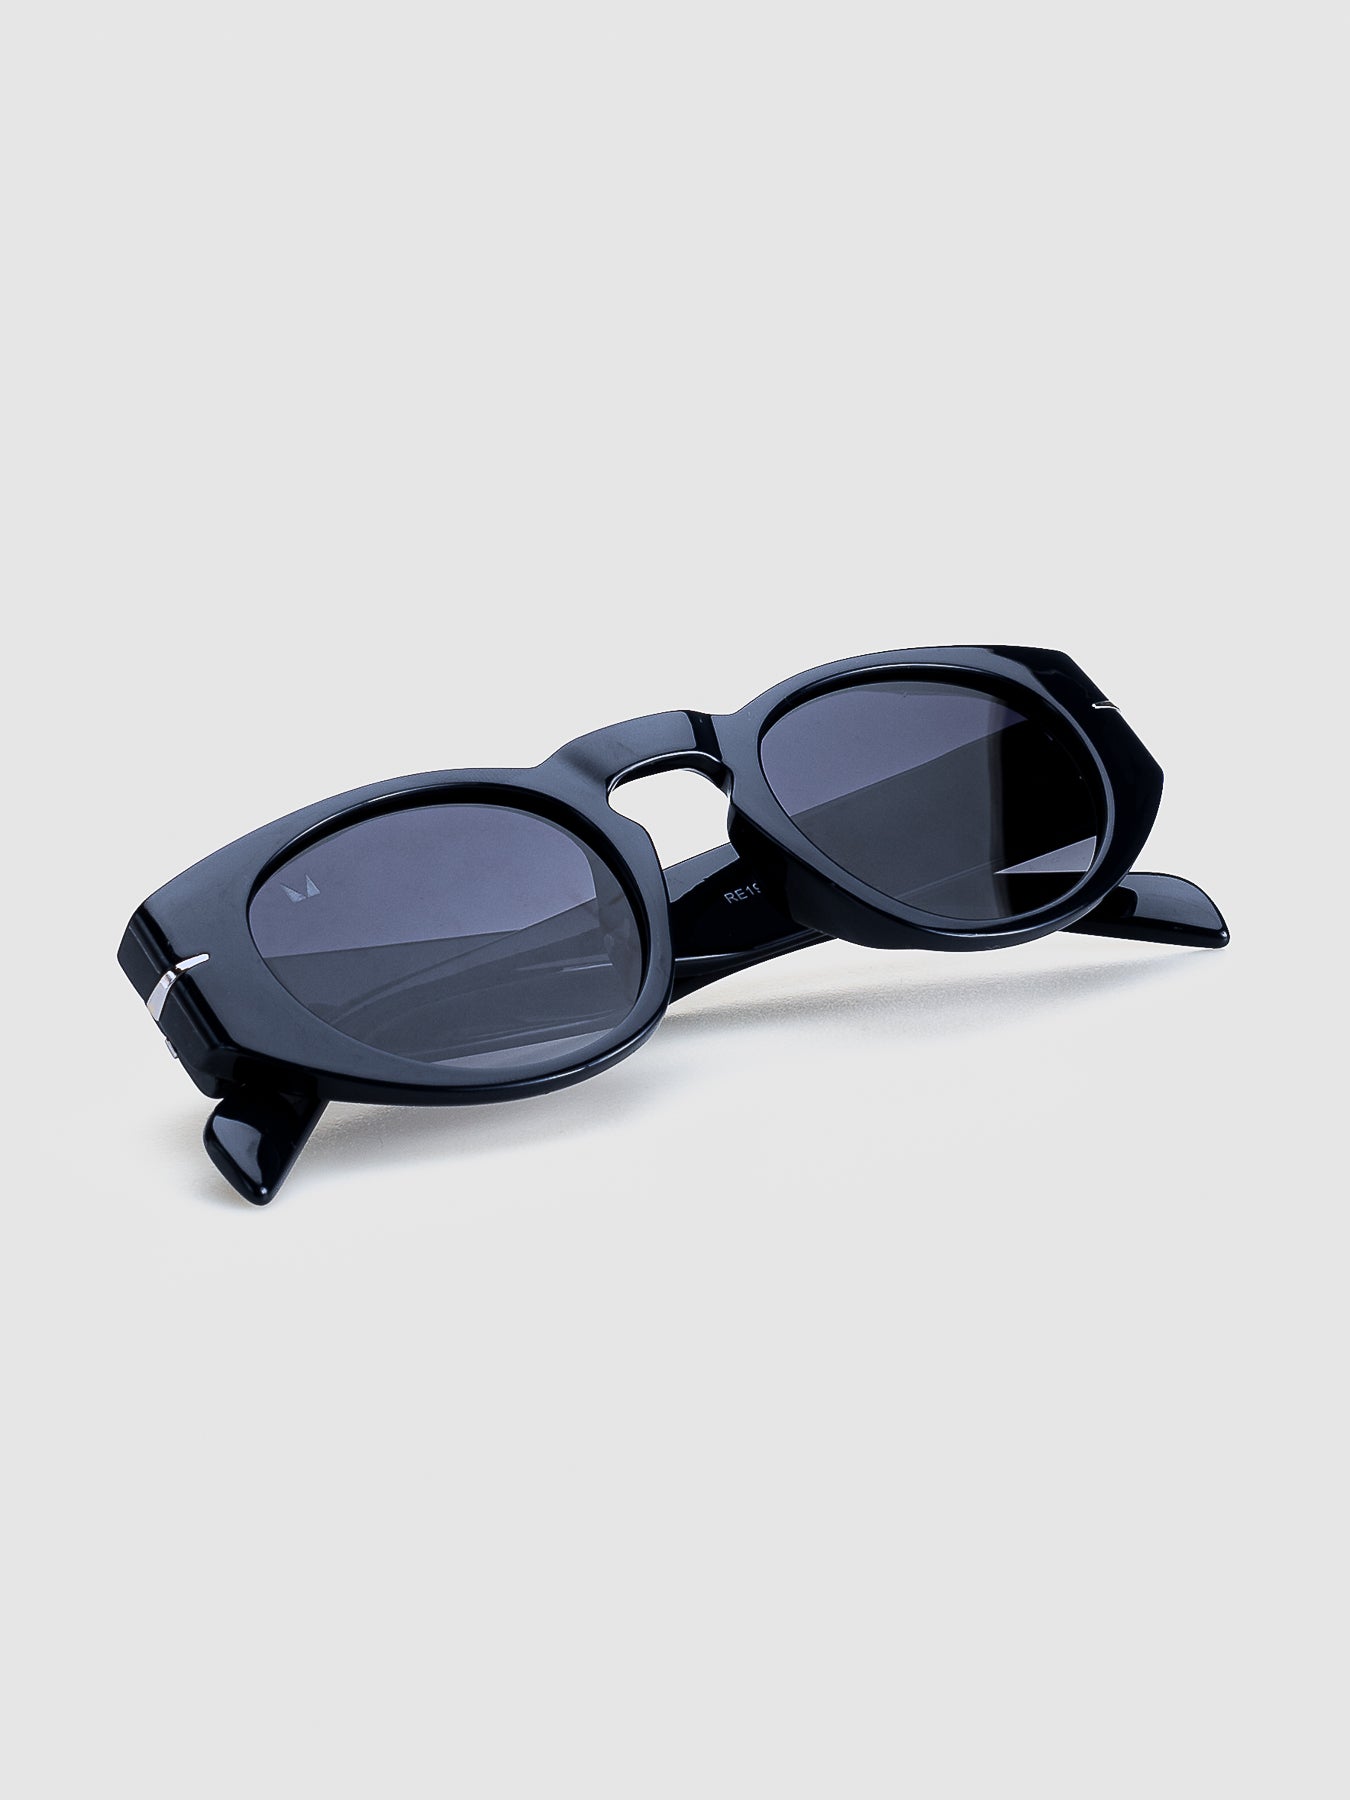 Óculos de Sol MVCK Leduc Polarizado